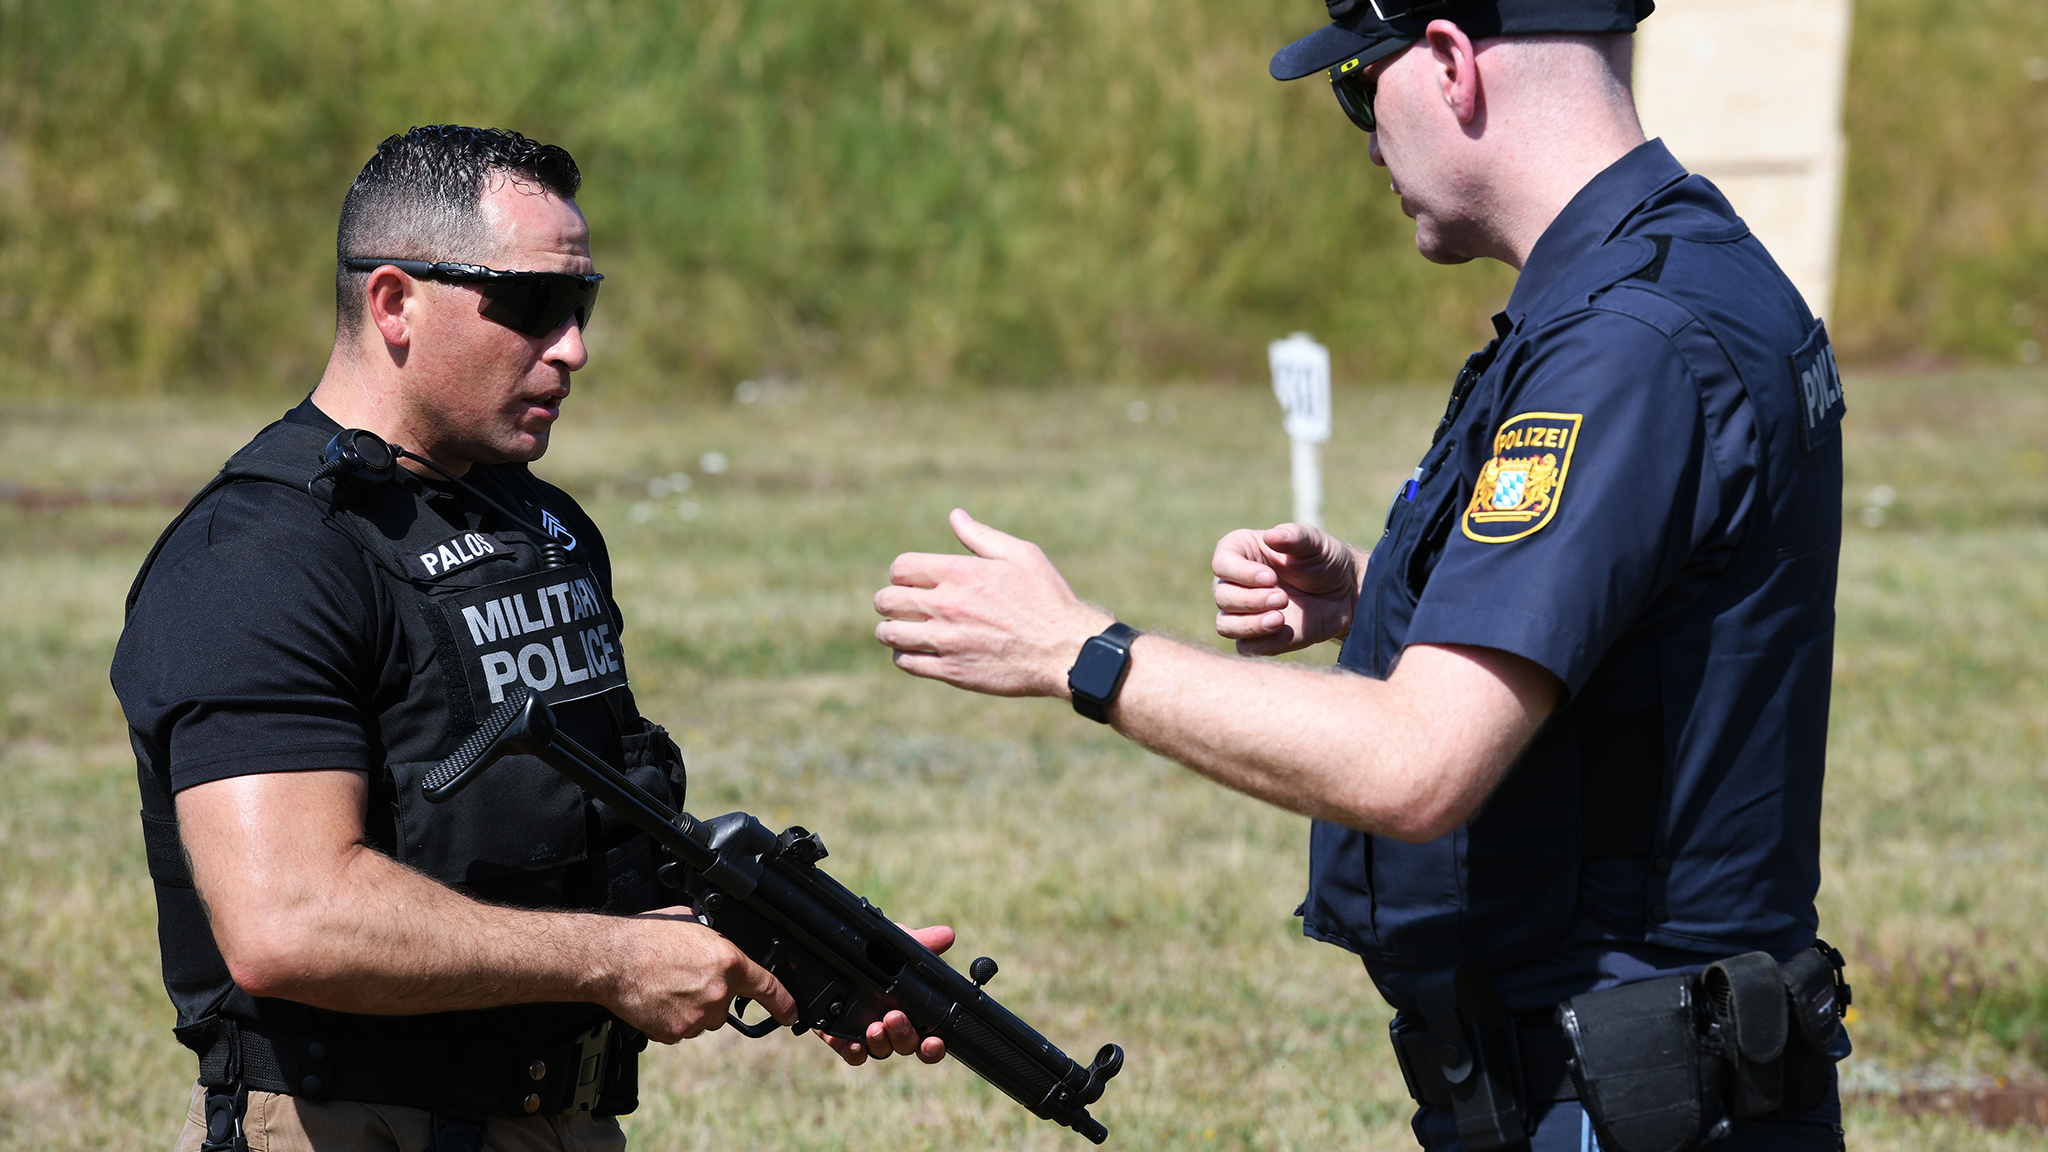 U.S. Military Police and German Polizei participate in friendship